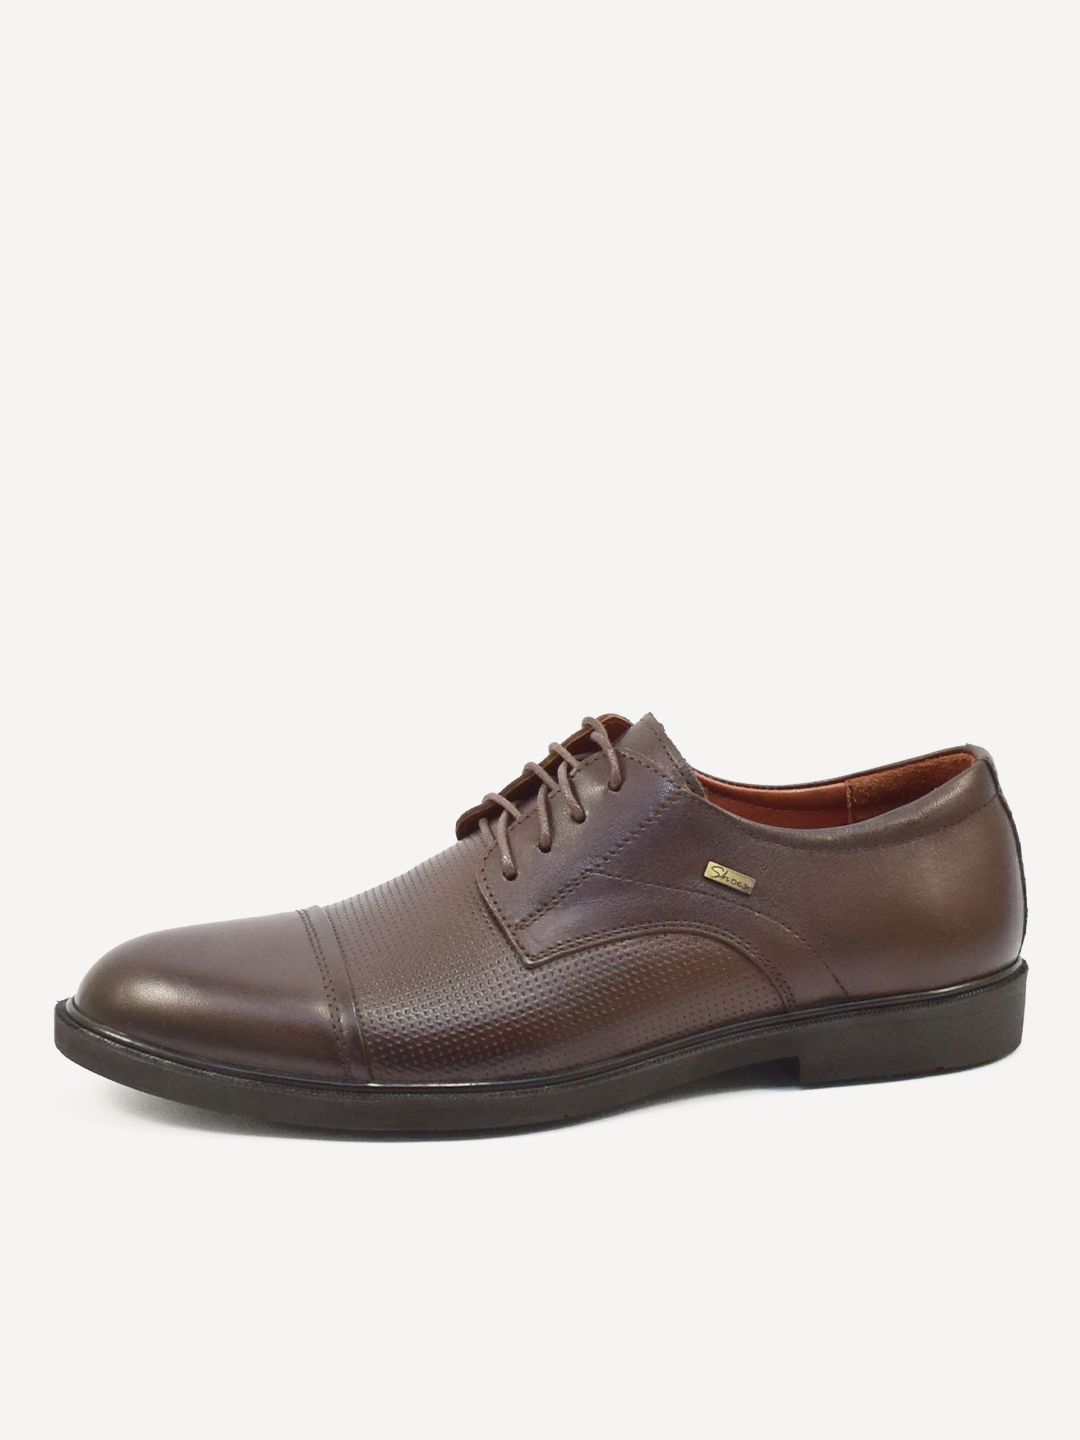 Туфли мужские Baratto 5-541-304-1 коричневые 44 RU